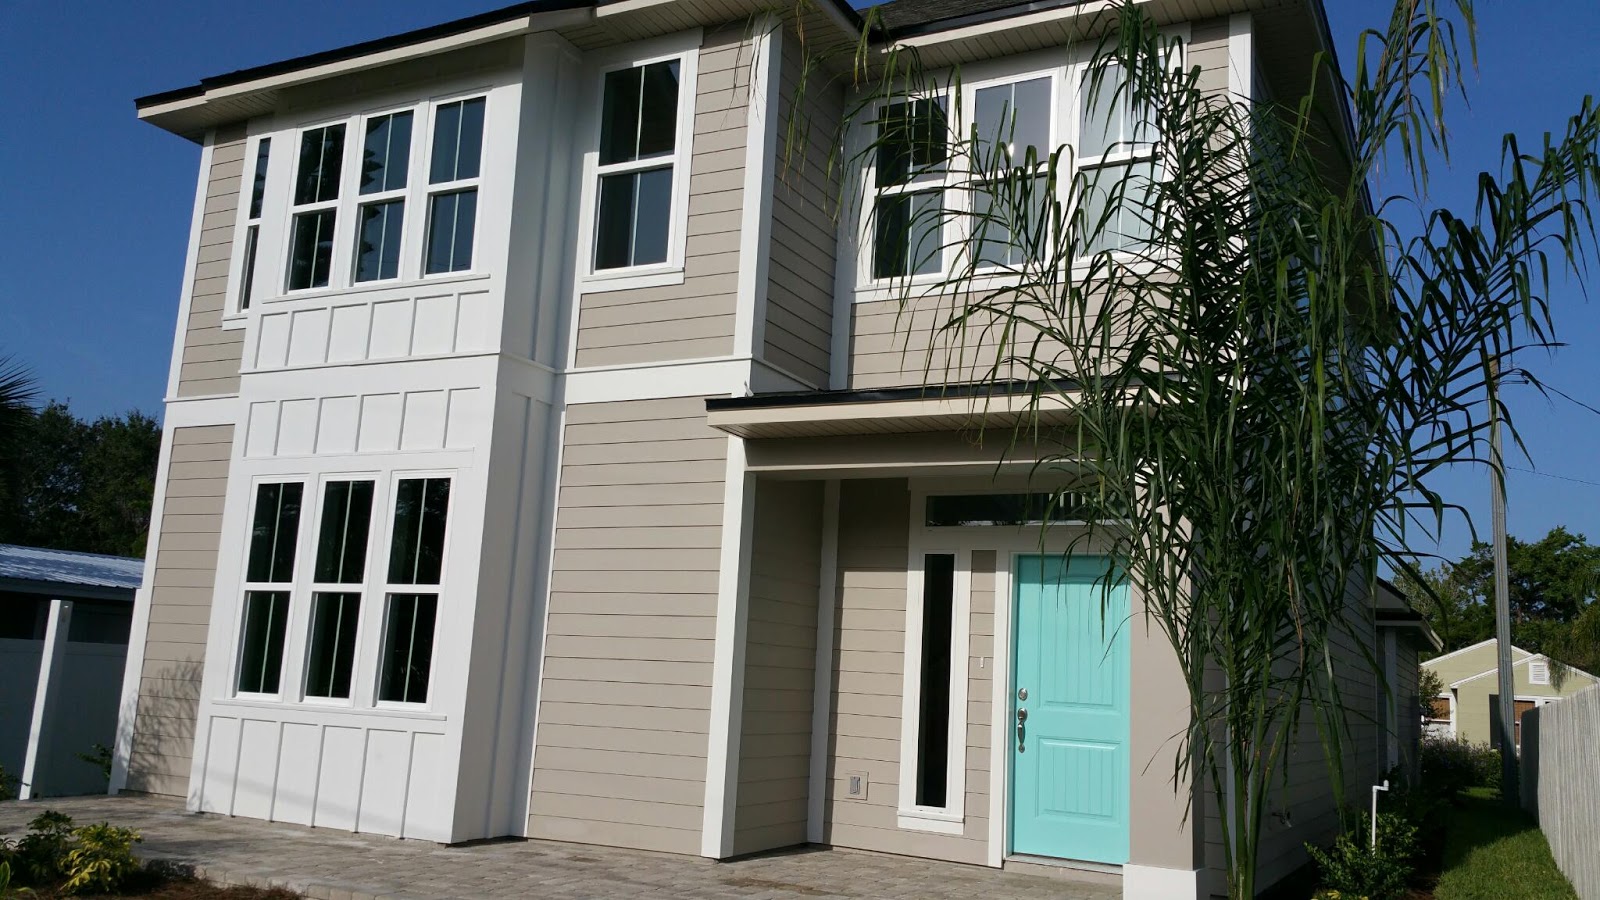 Coastal Living Home Builders LLC